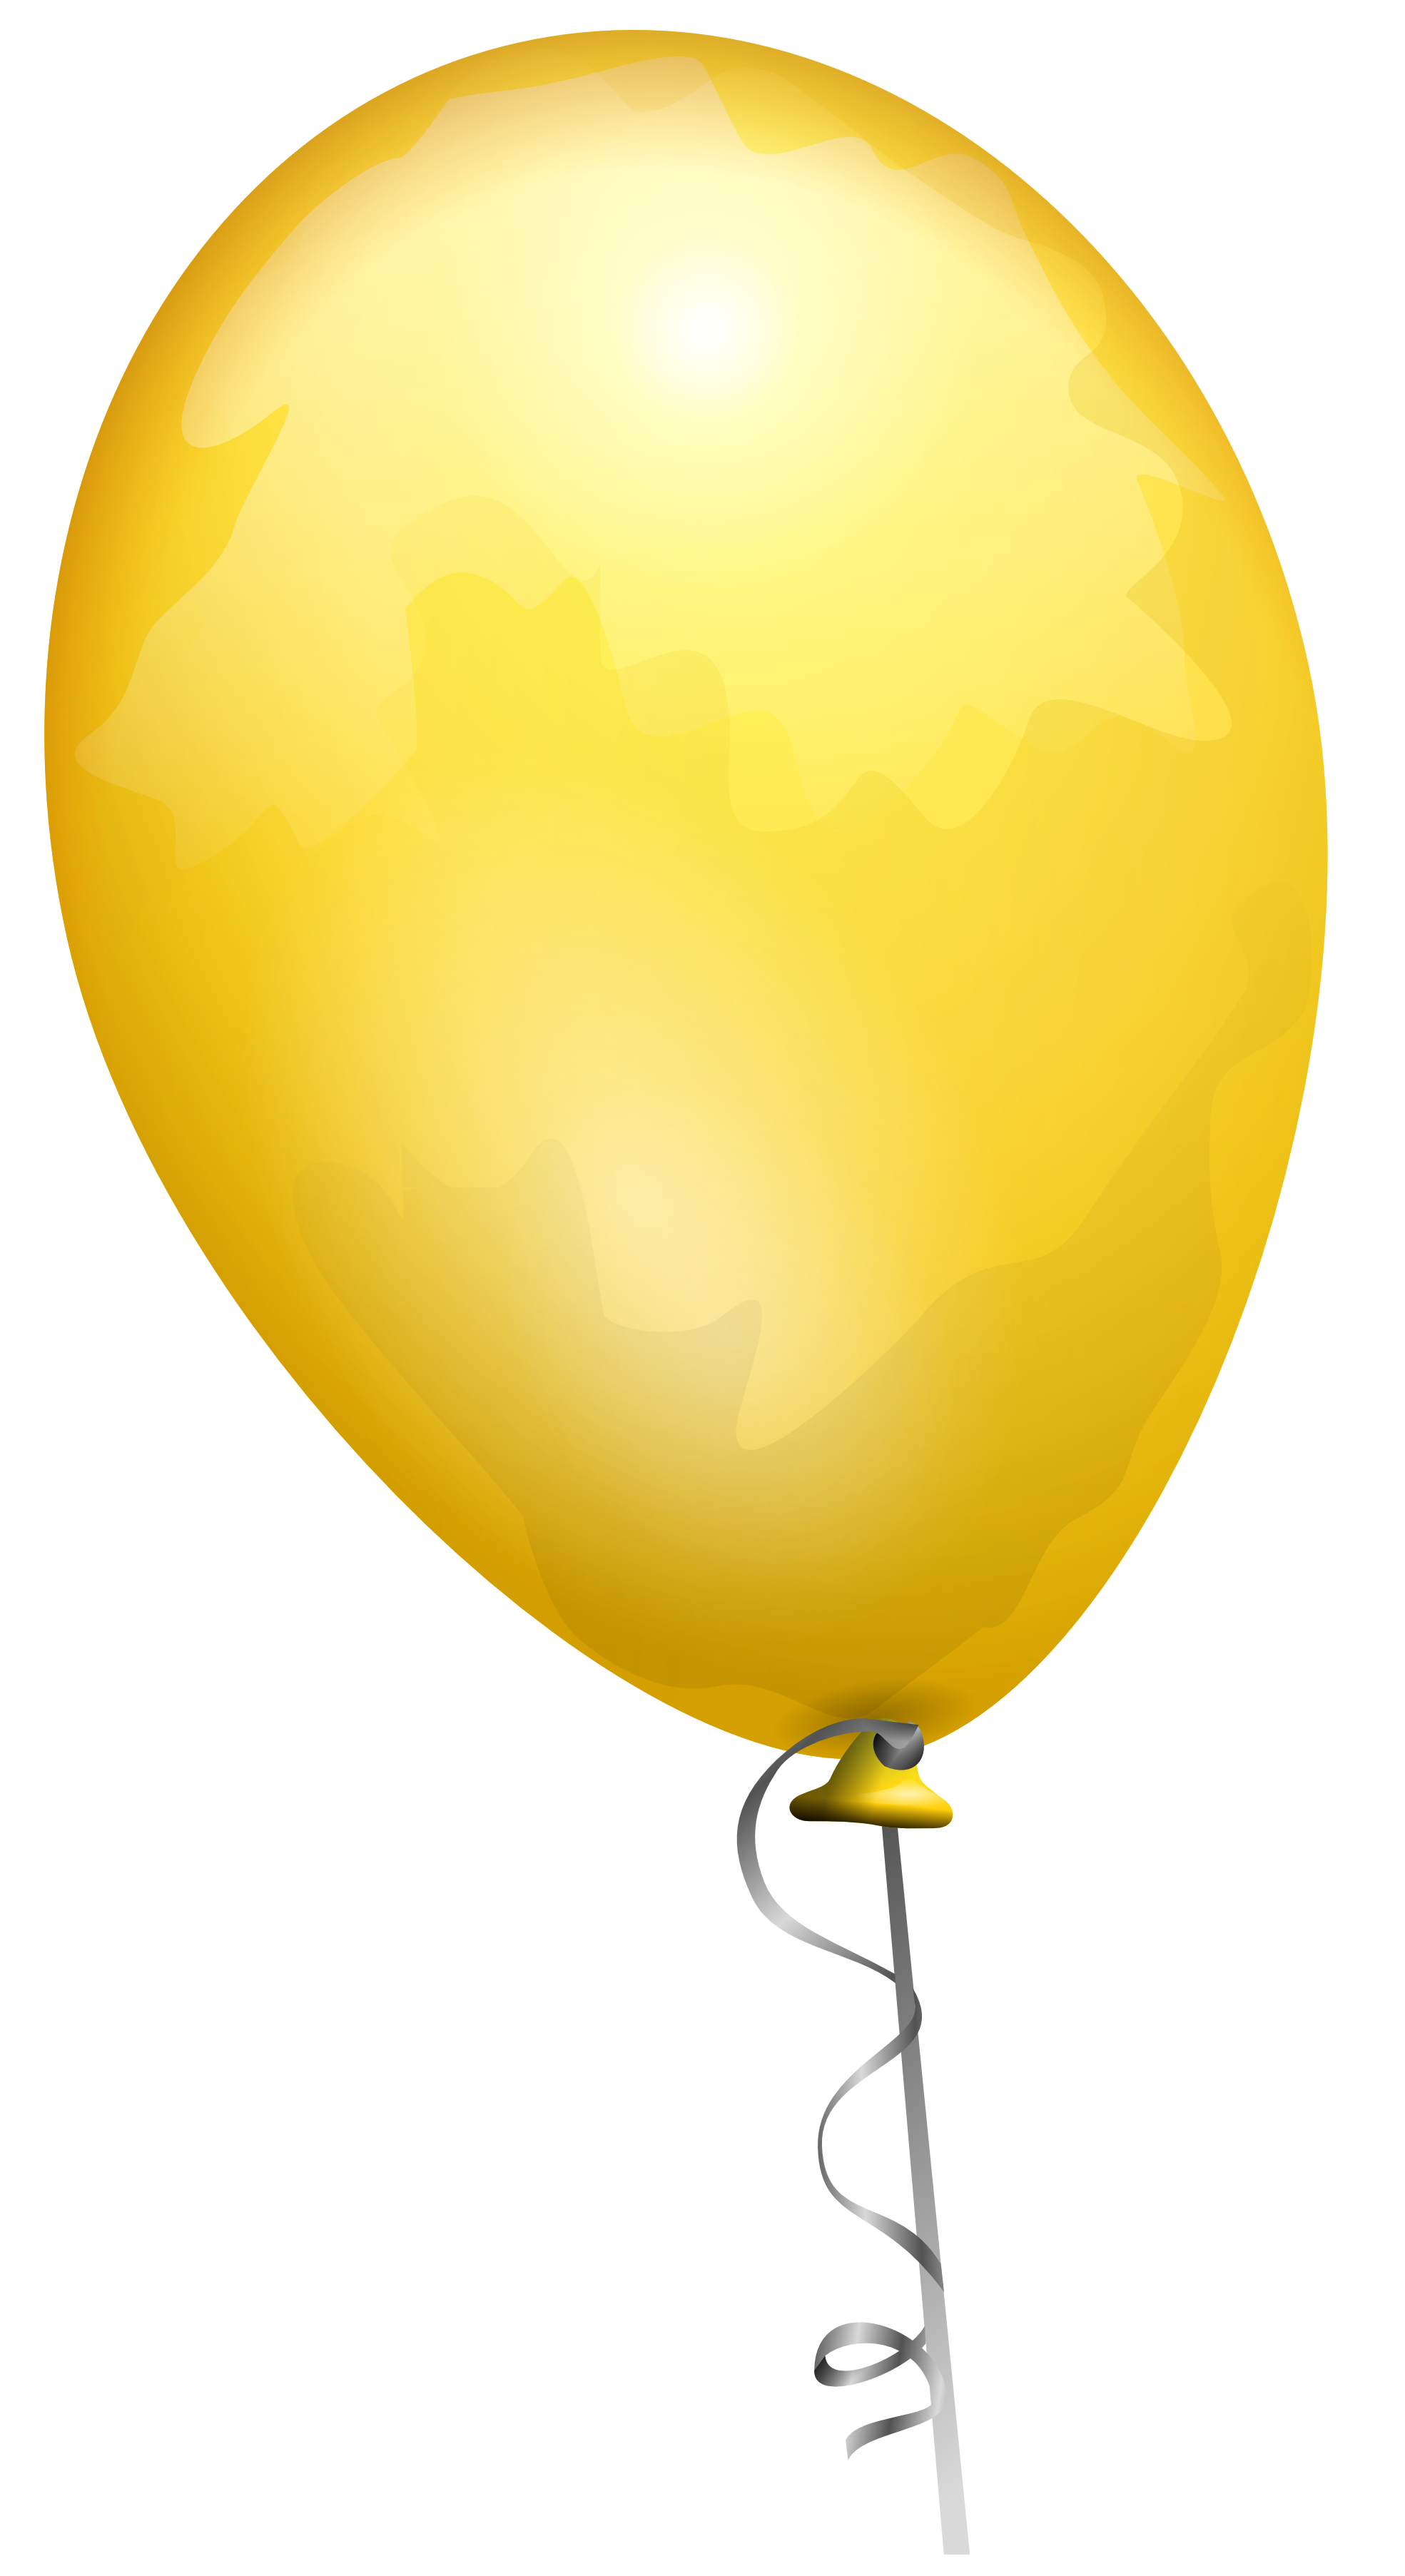 Yellow Party Ballon PNG Image